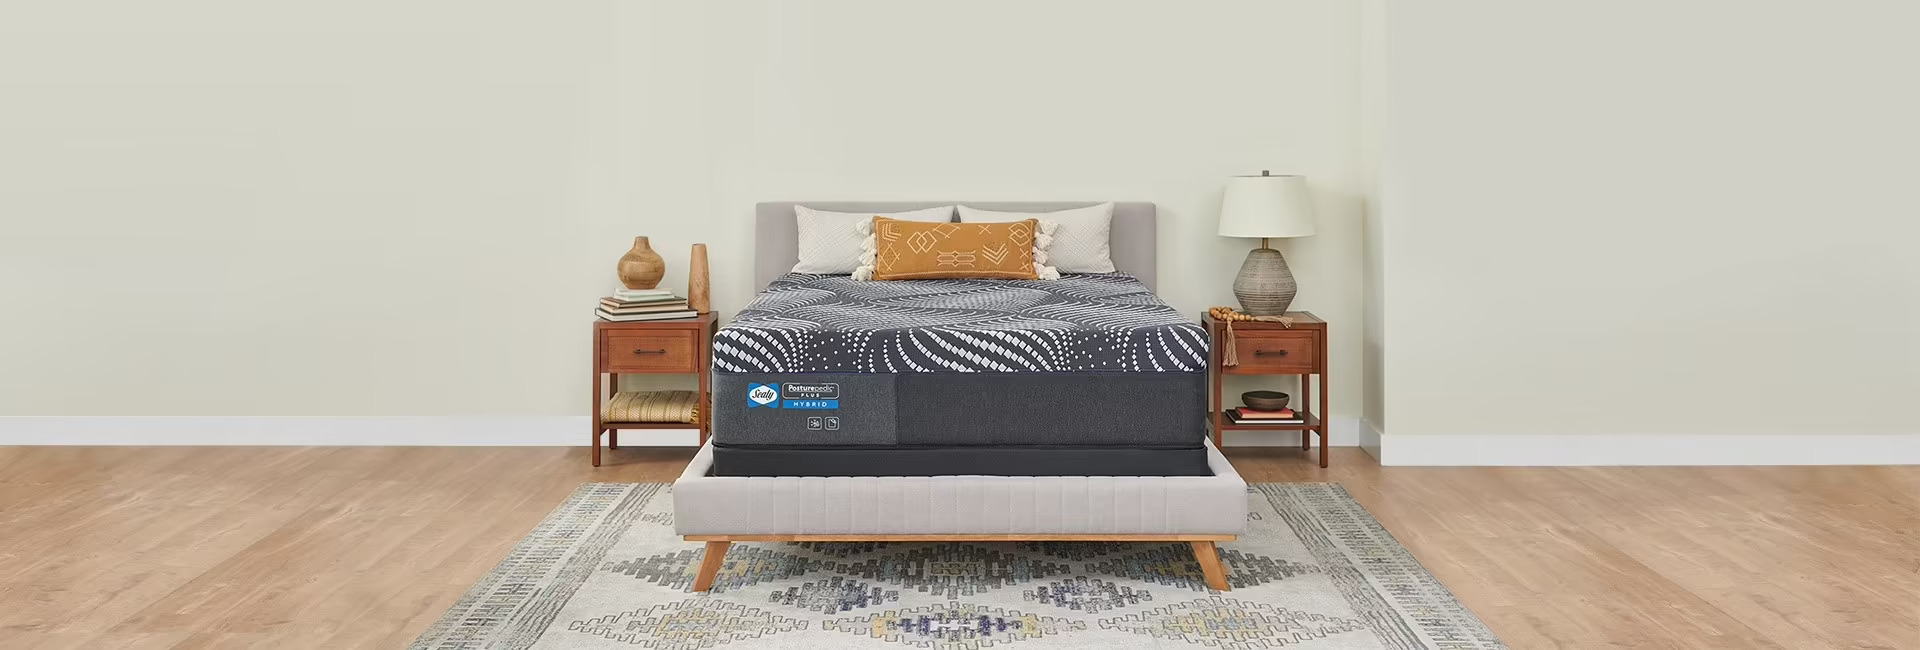 sealy mattress vs serta mattress